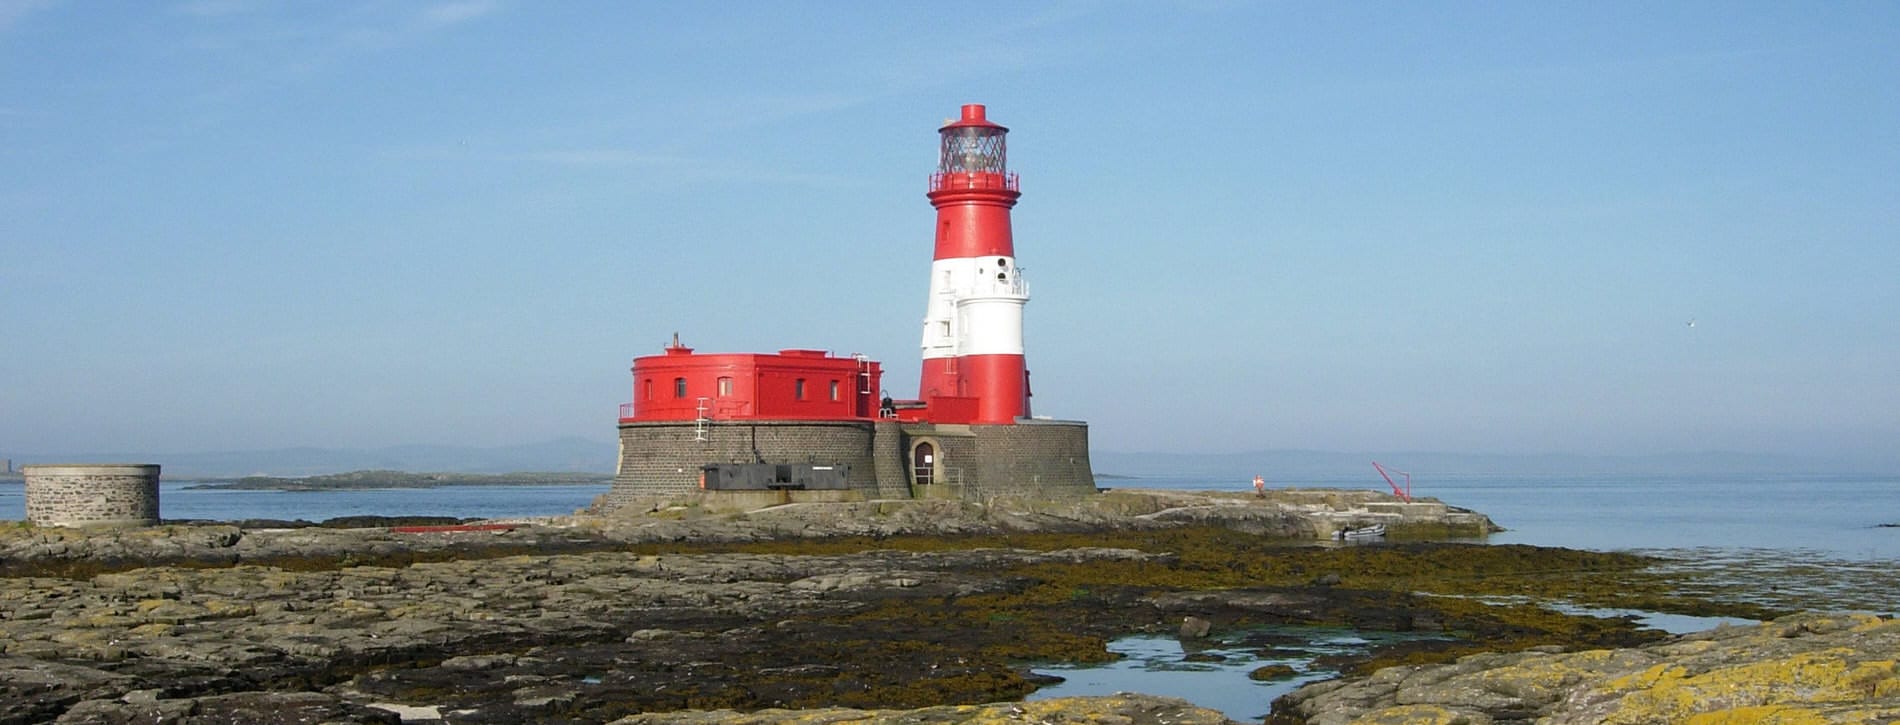 Longstone Lighthouse Farne Islands Northumberland Coast